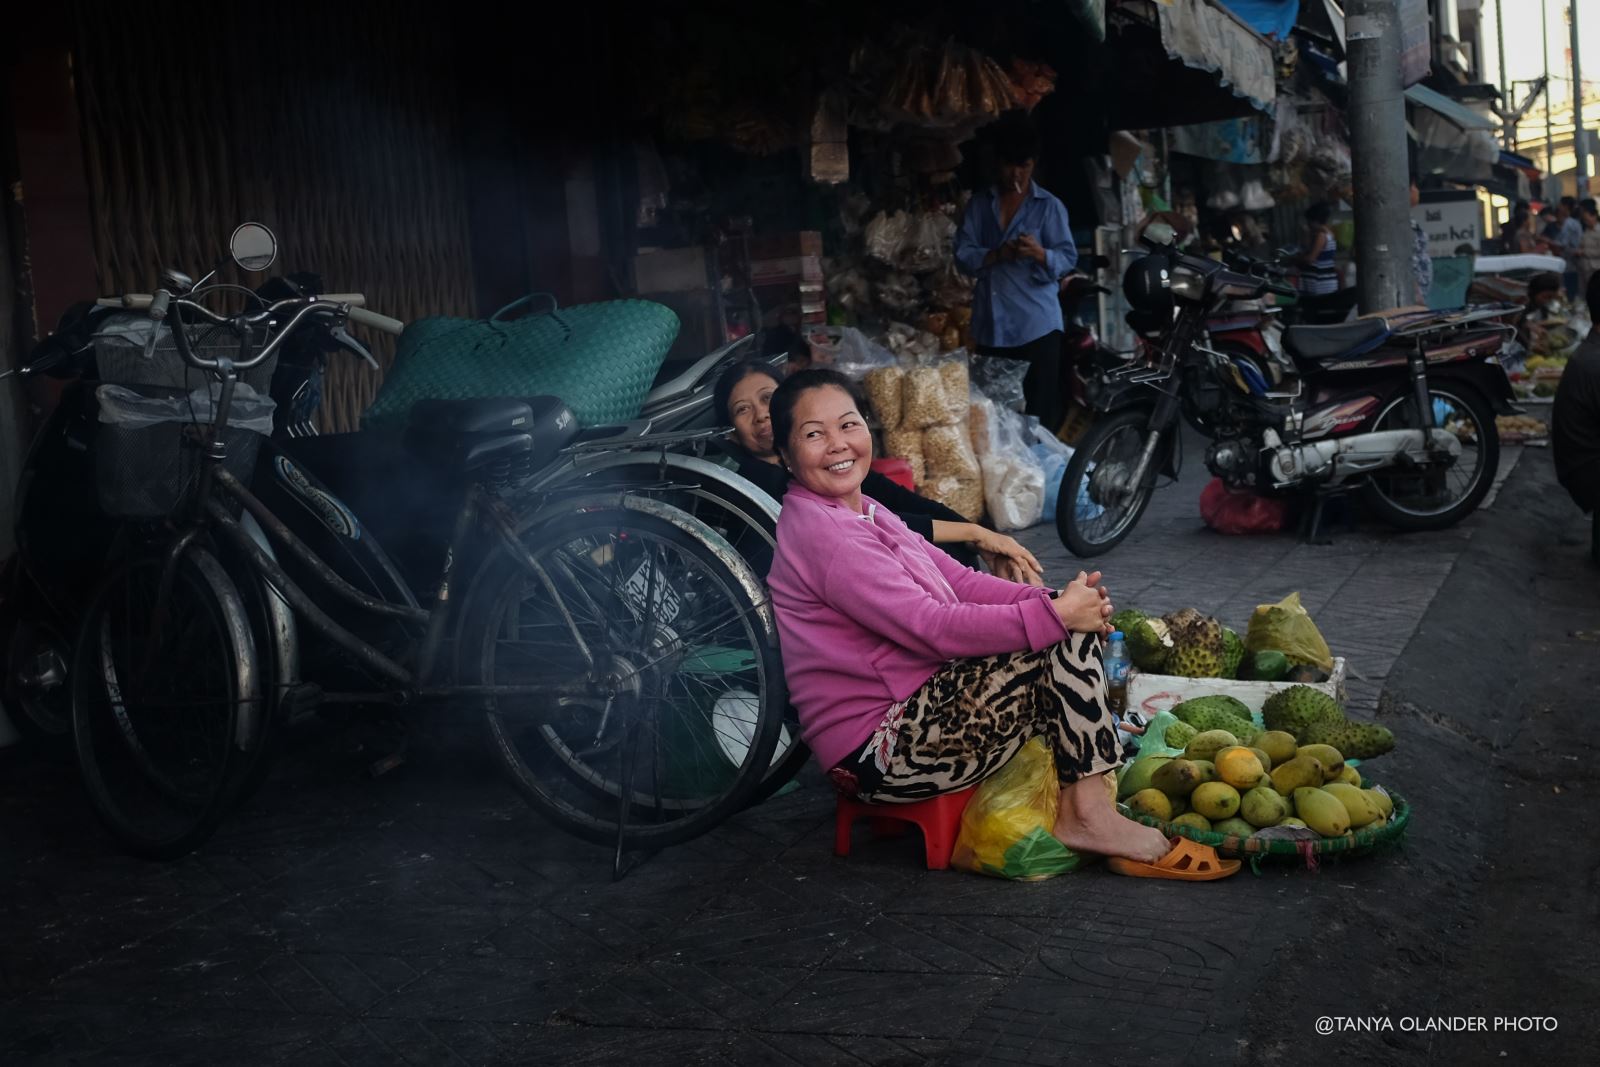 Saigon market women through the lens of Swedish photographer